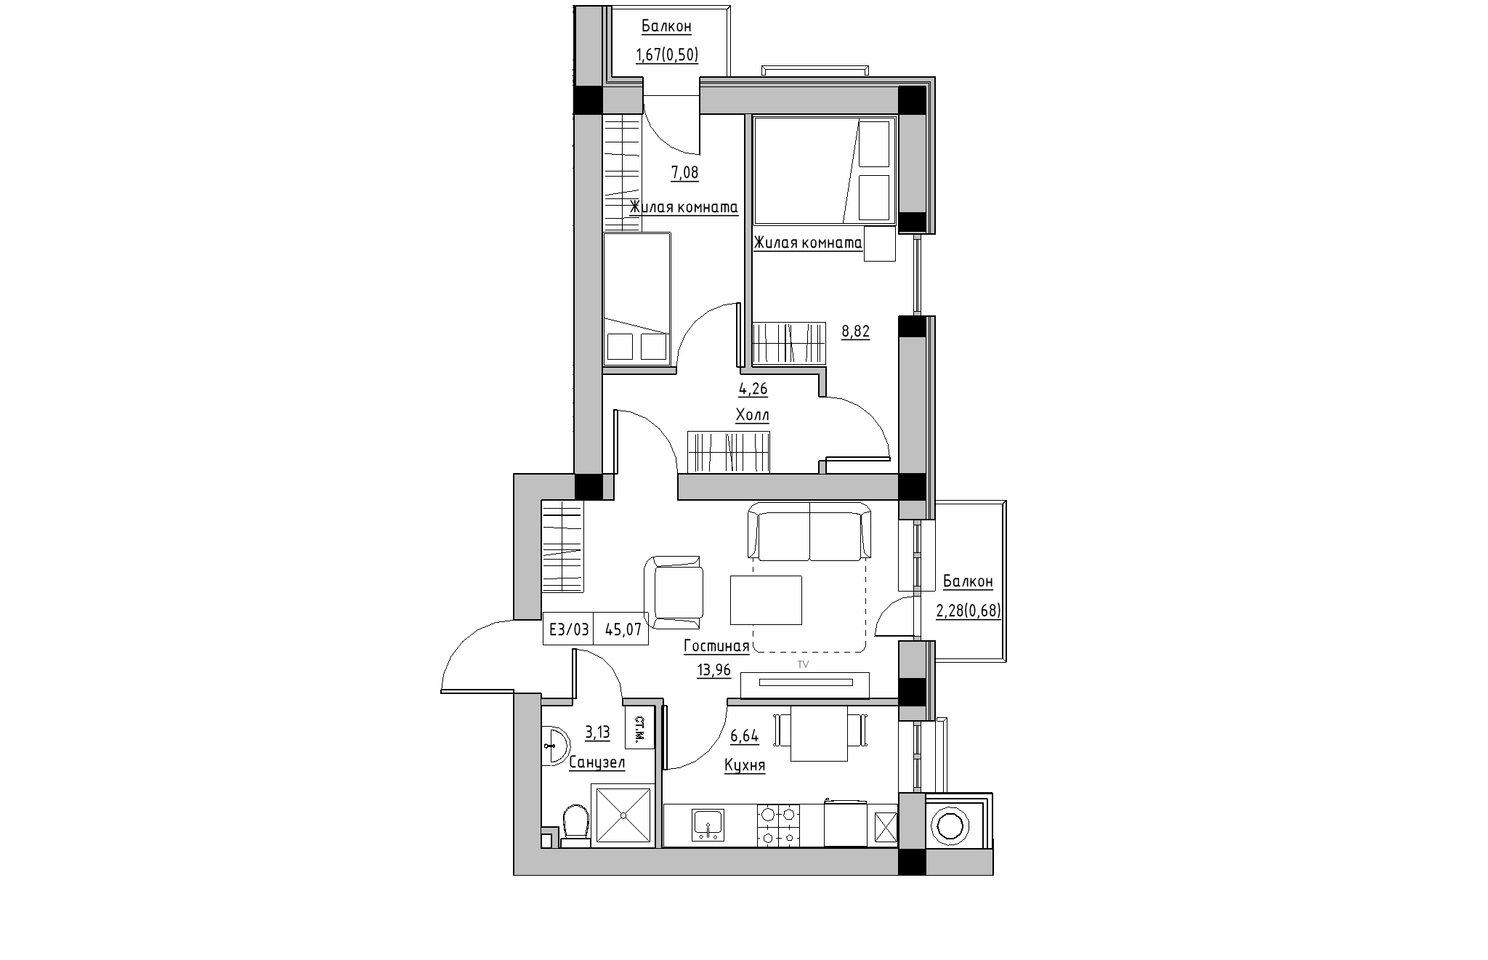 Planning 3-rm flats area 45.07m2, KS-010-05/0011.